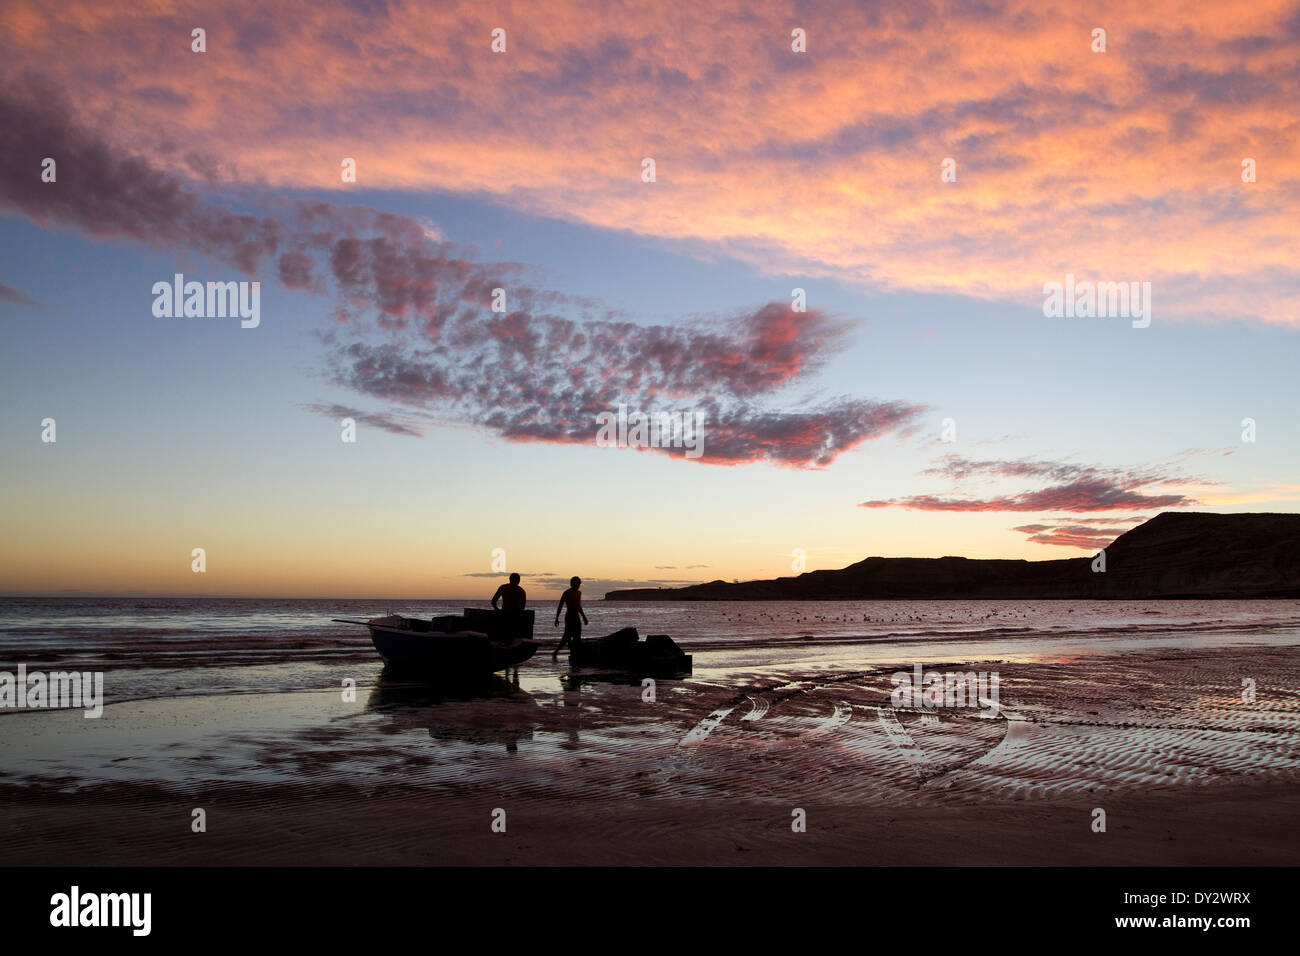 Argentina Sunset sky with fisherman at the beach of Puerto Piramides, Peninsula Valdes, Valdez, Patagonia, Argentina. Stock Photo